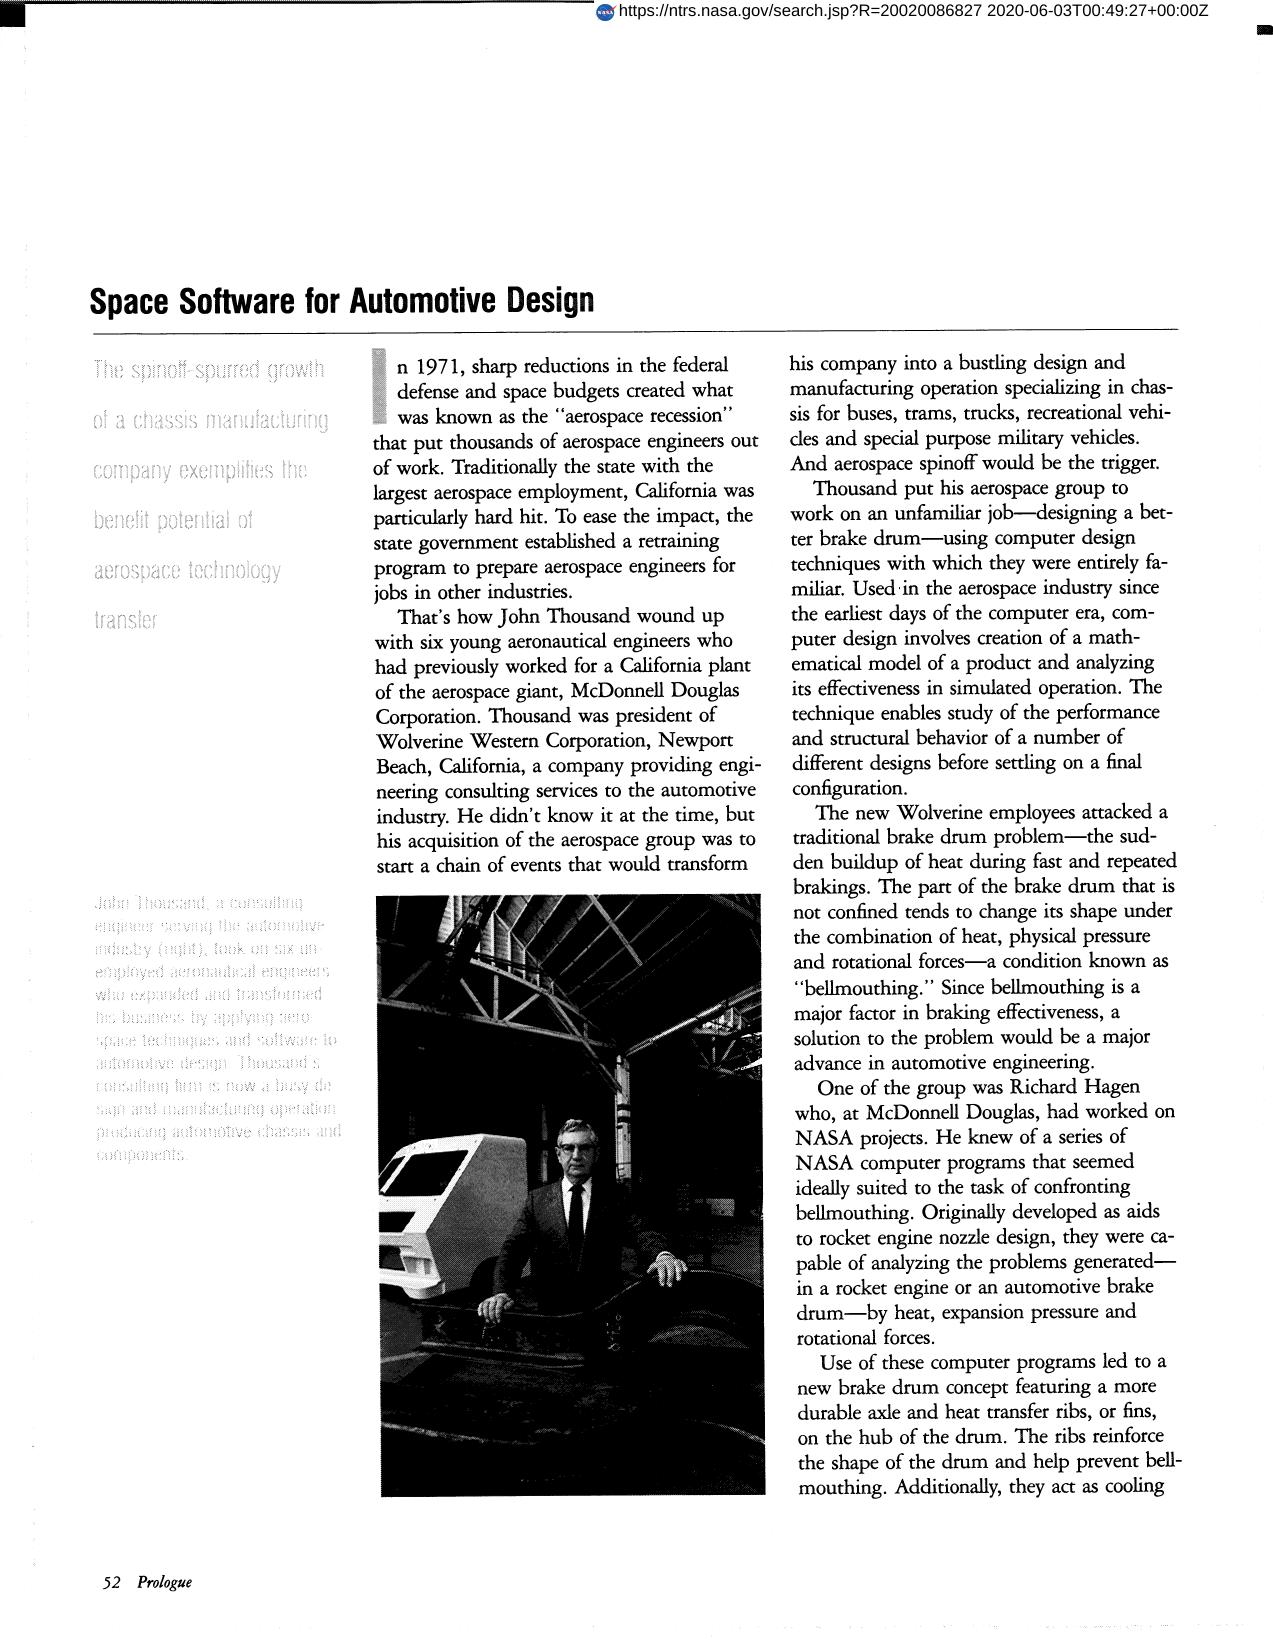 Space Software for Automotive Design